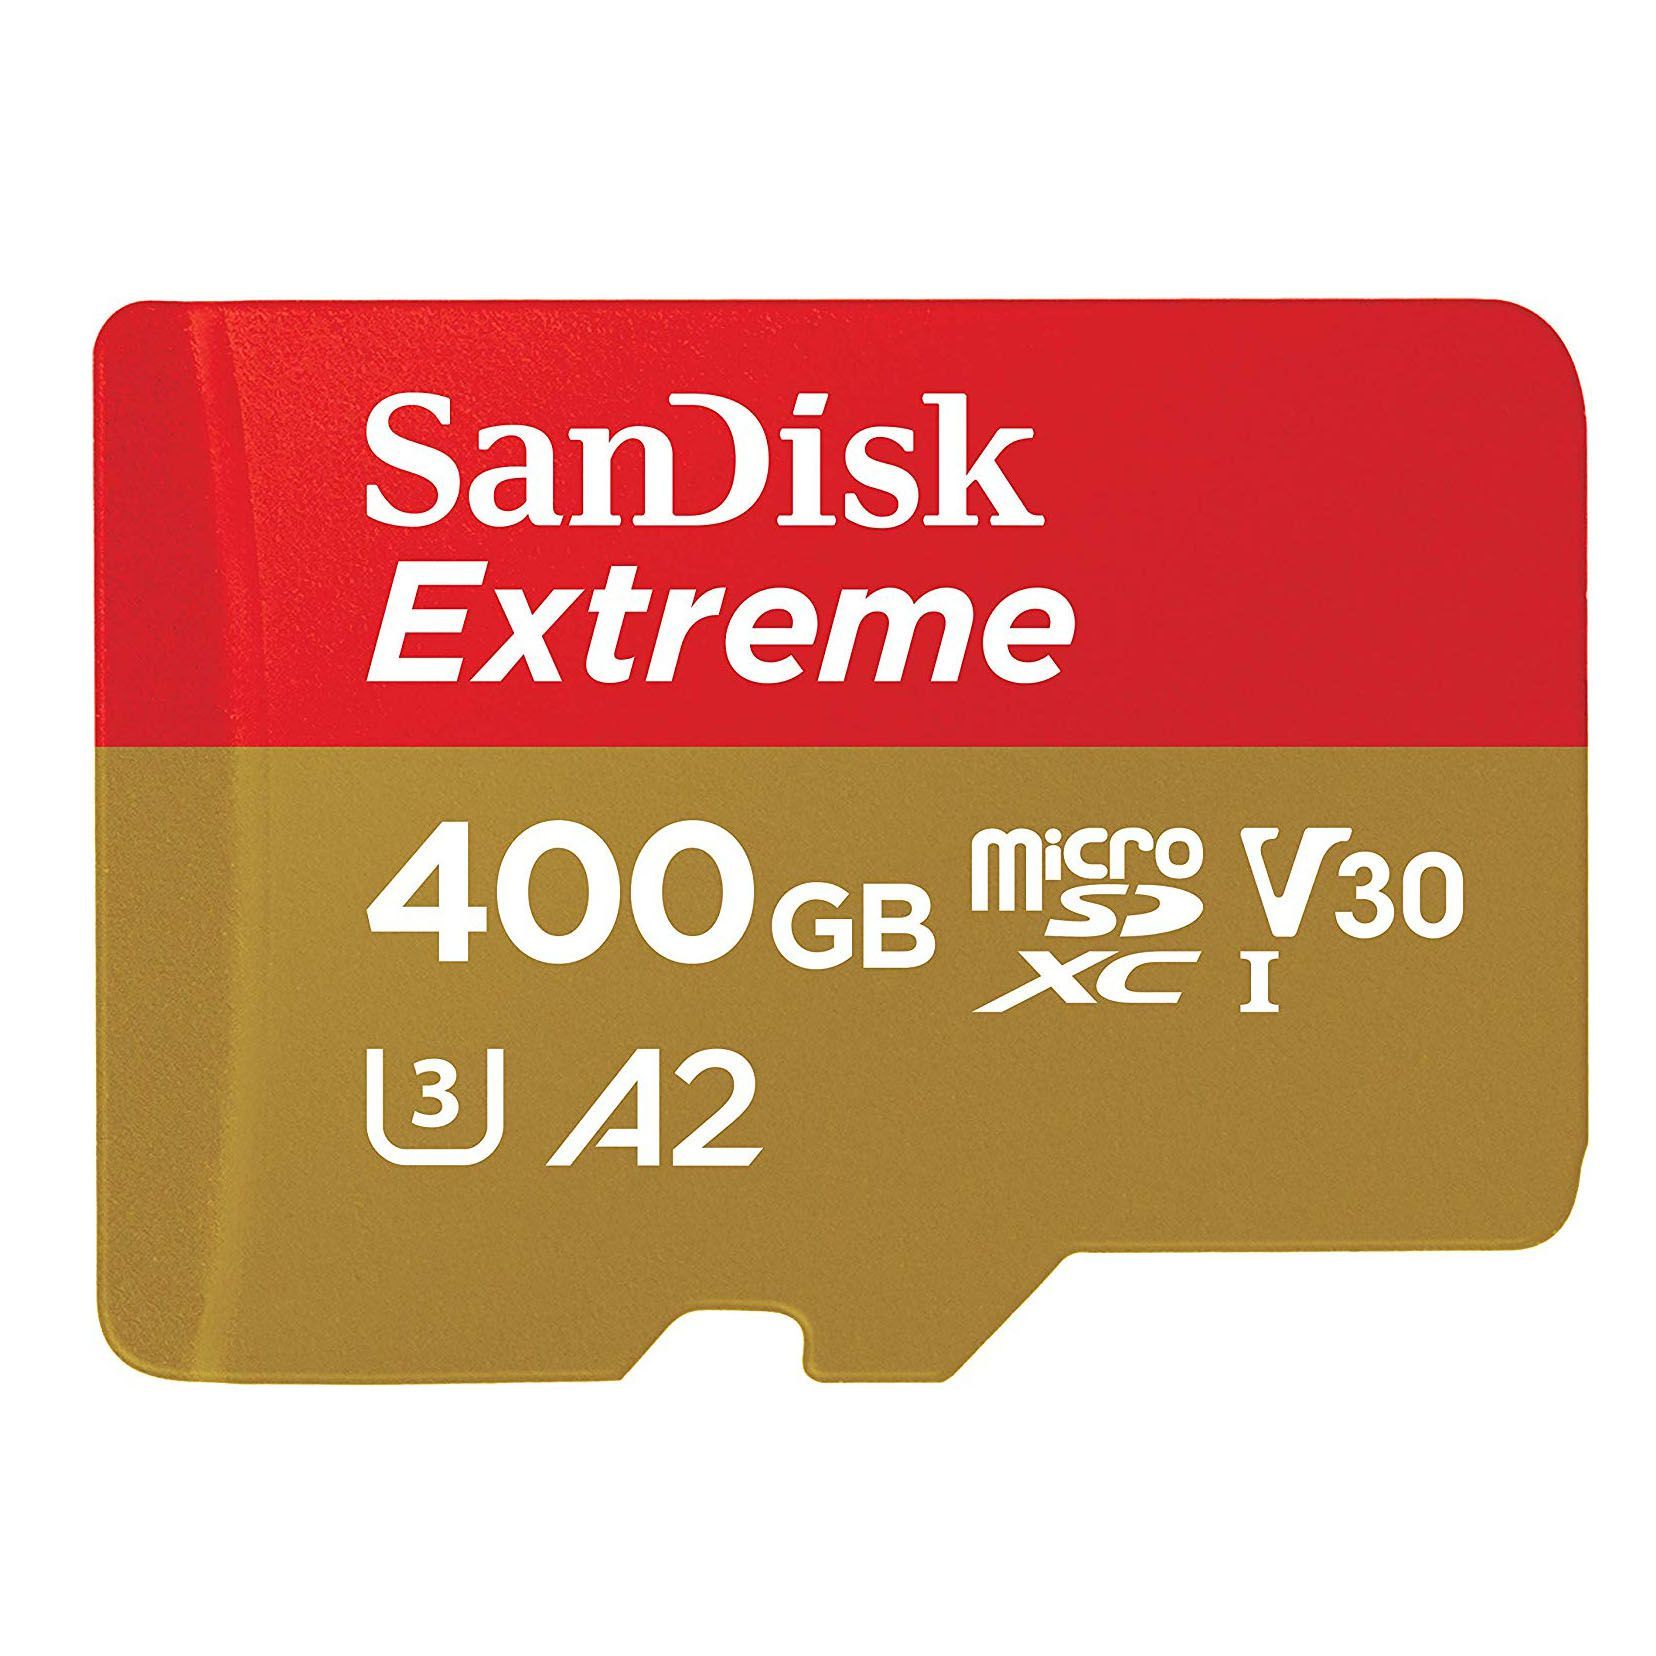 SanDisk 400GB Extreme microSD